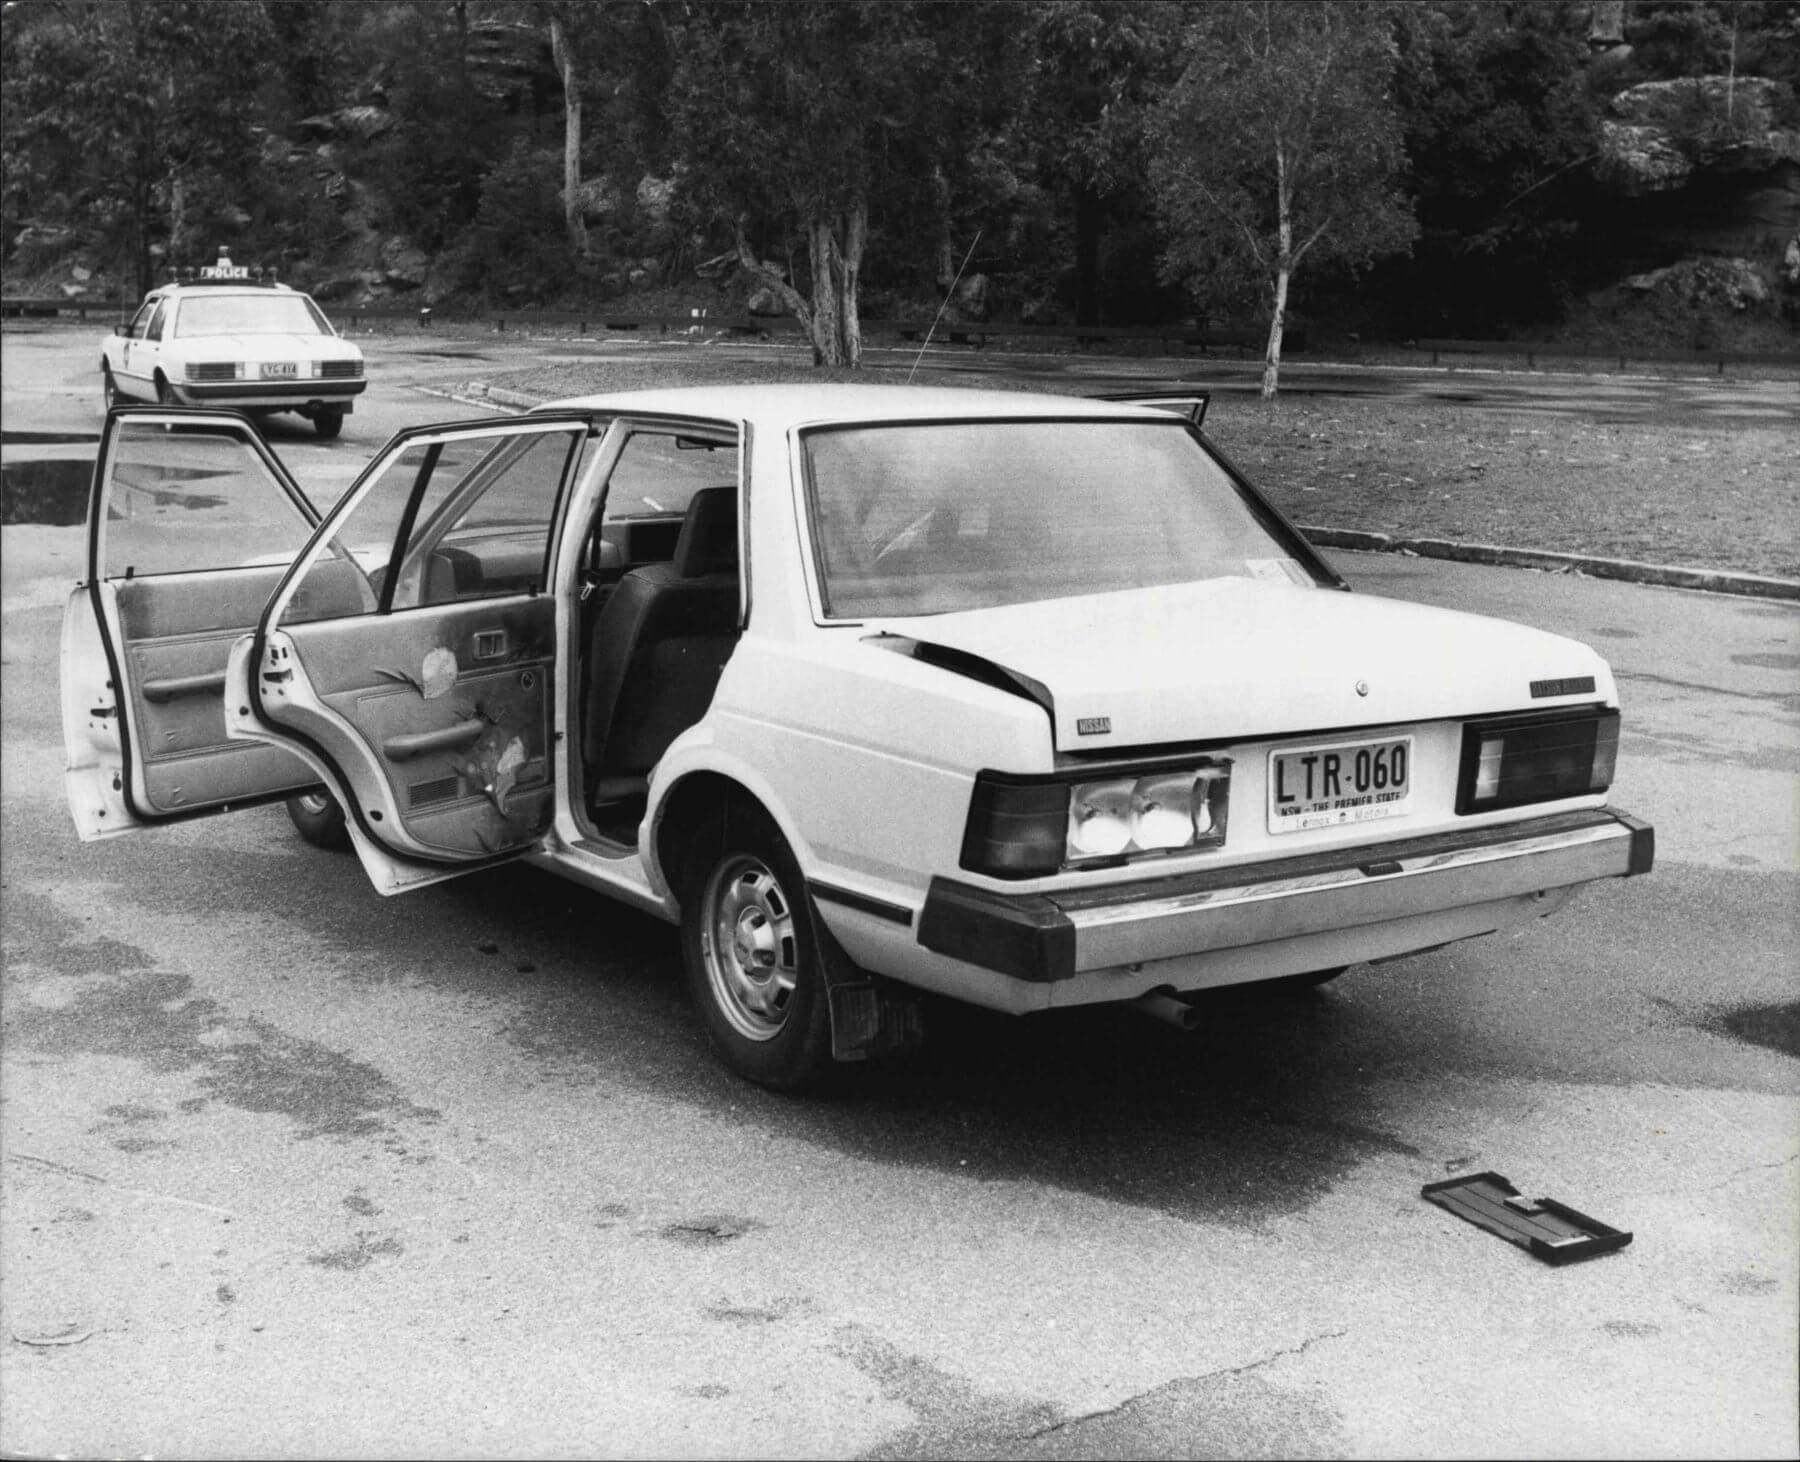 A Datsun Bluebird model pictured in 1983 after a car fire